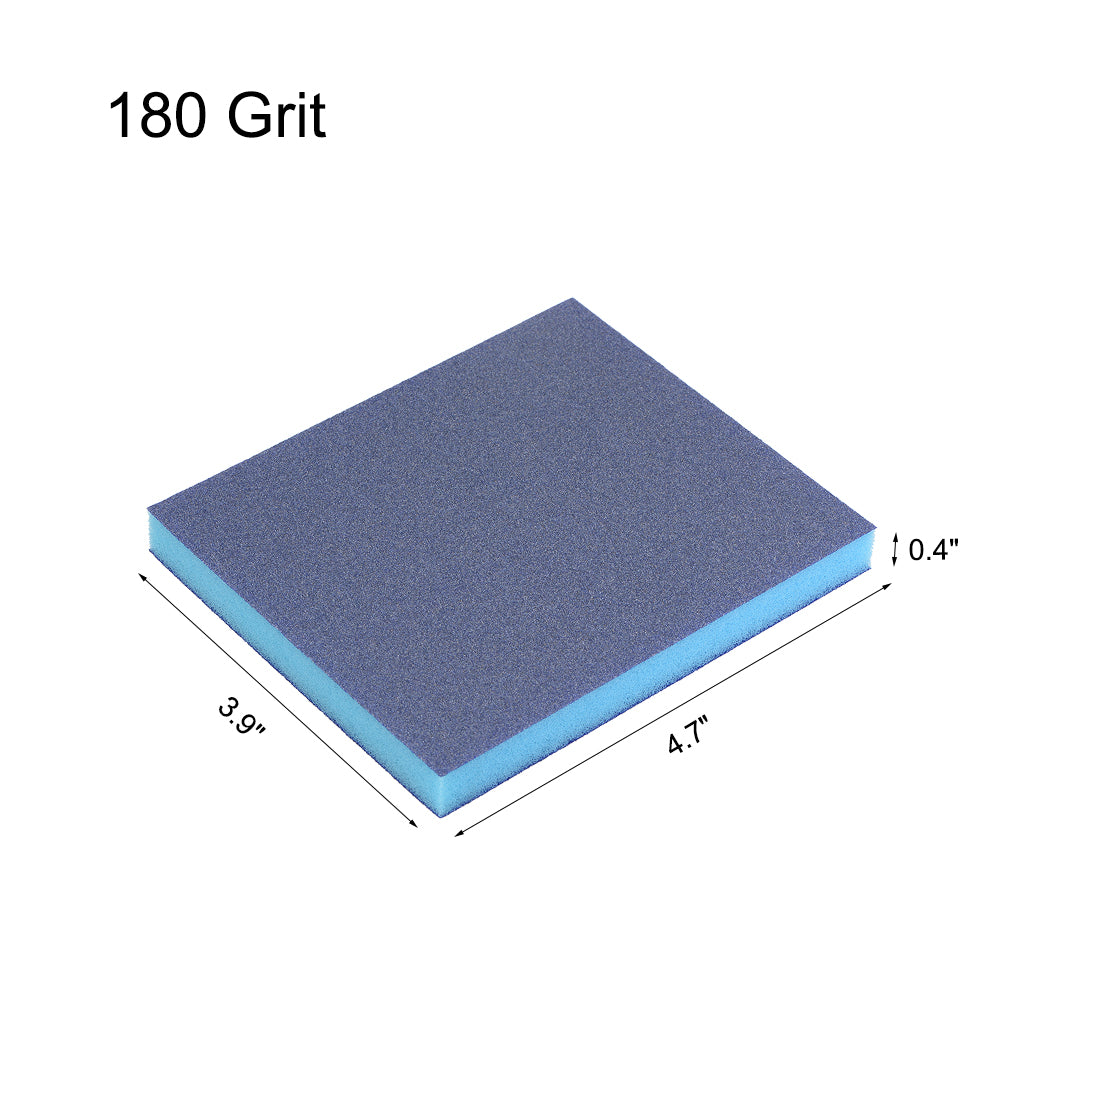 uxcell Uxcell Sanding Sponge 180 Grit Sanding Block Pad 4.7inch x 3.9inch x 0.4inch Blue 3pcs